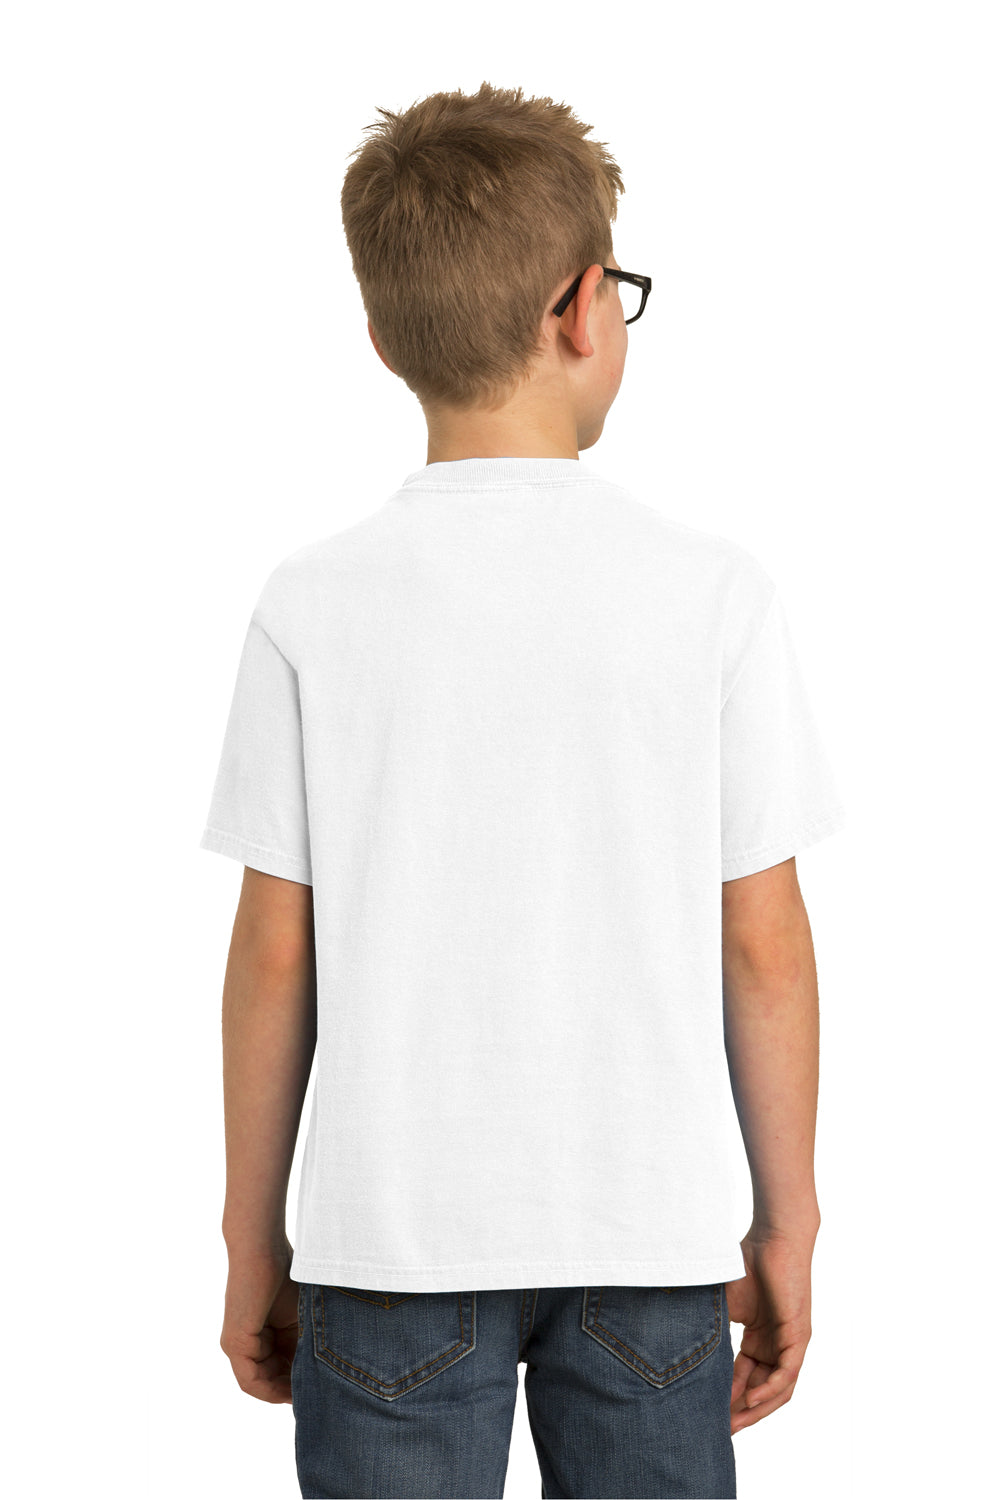 Port & Company PC099Y Youth Beach Wash Short Sleeve Crewneck T-Shirt White Back